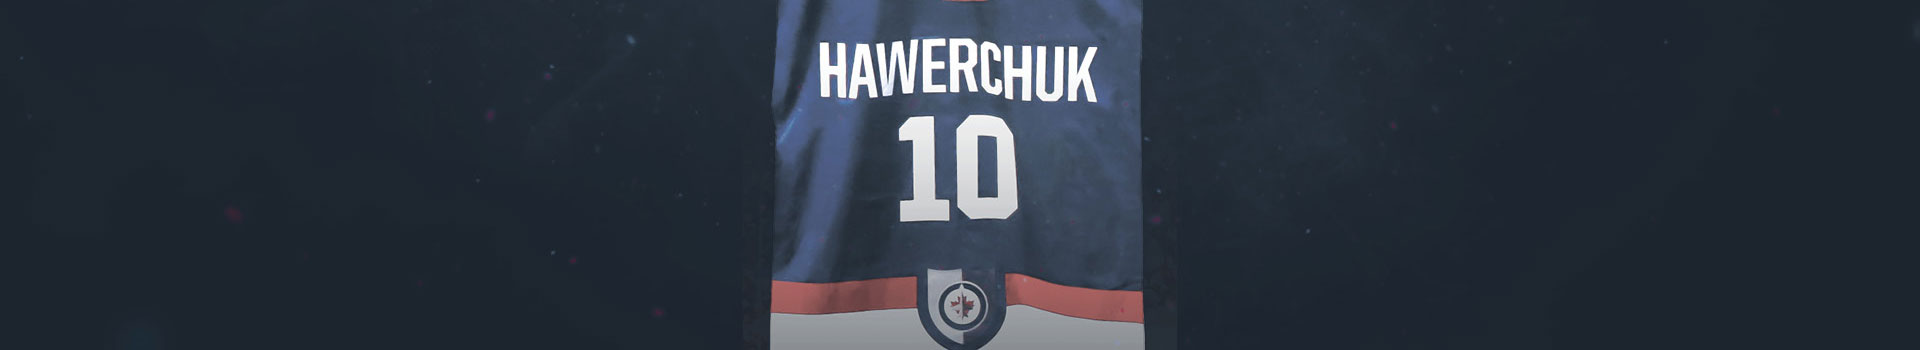 Winnipeg Jets - Dale Hawerchuk's banner has been